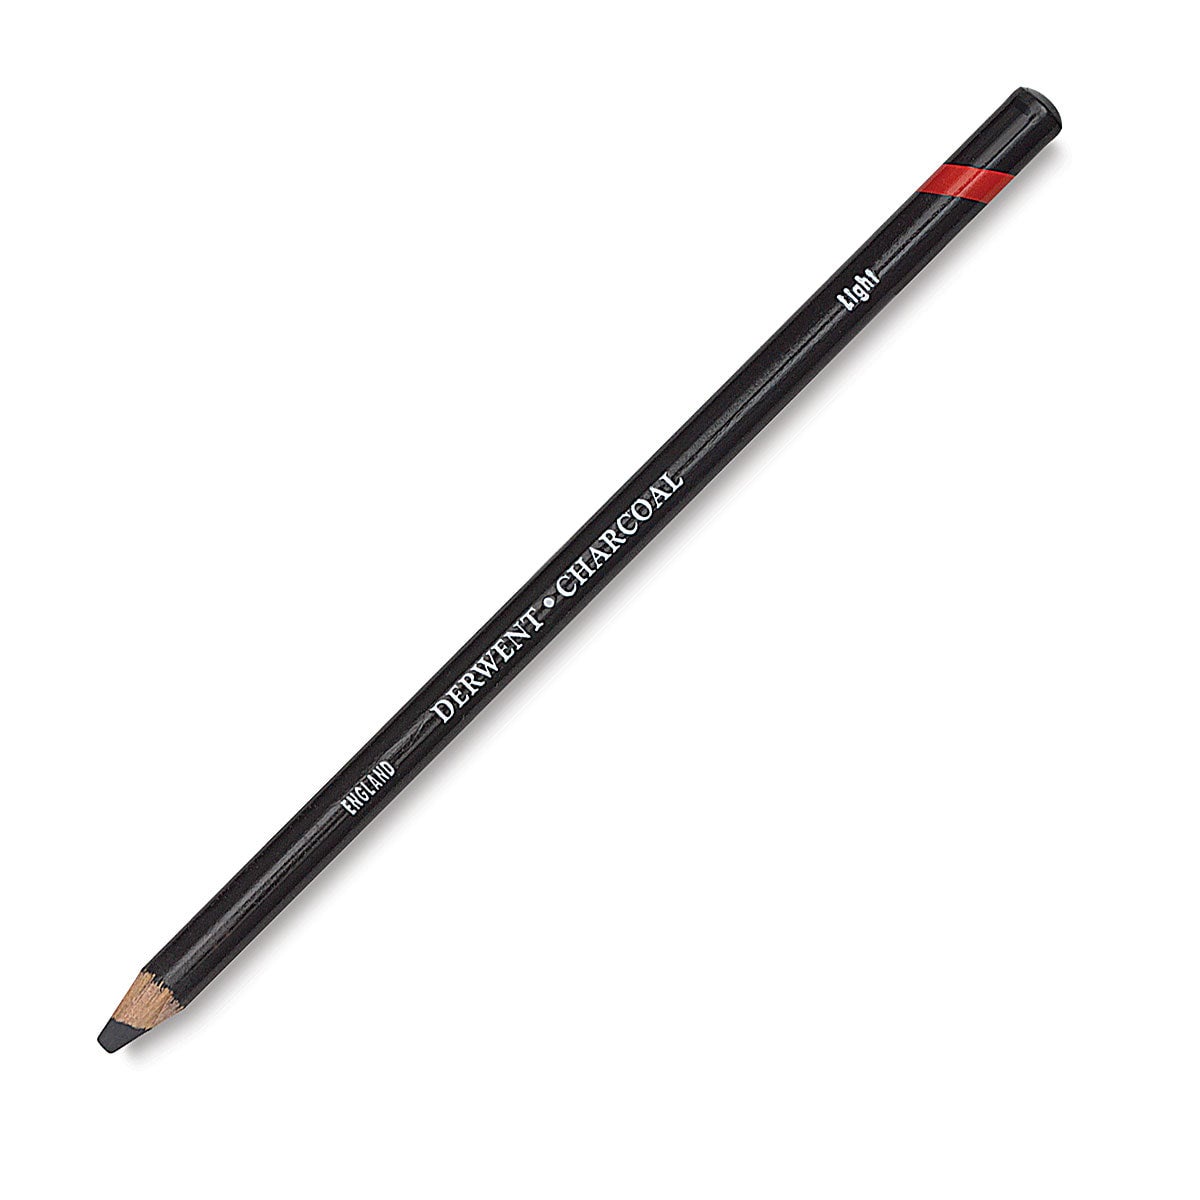 Derwent Charcoal Pencil - Light